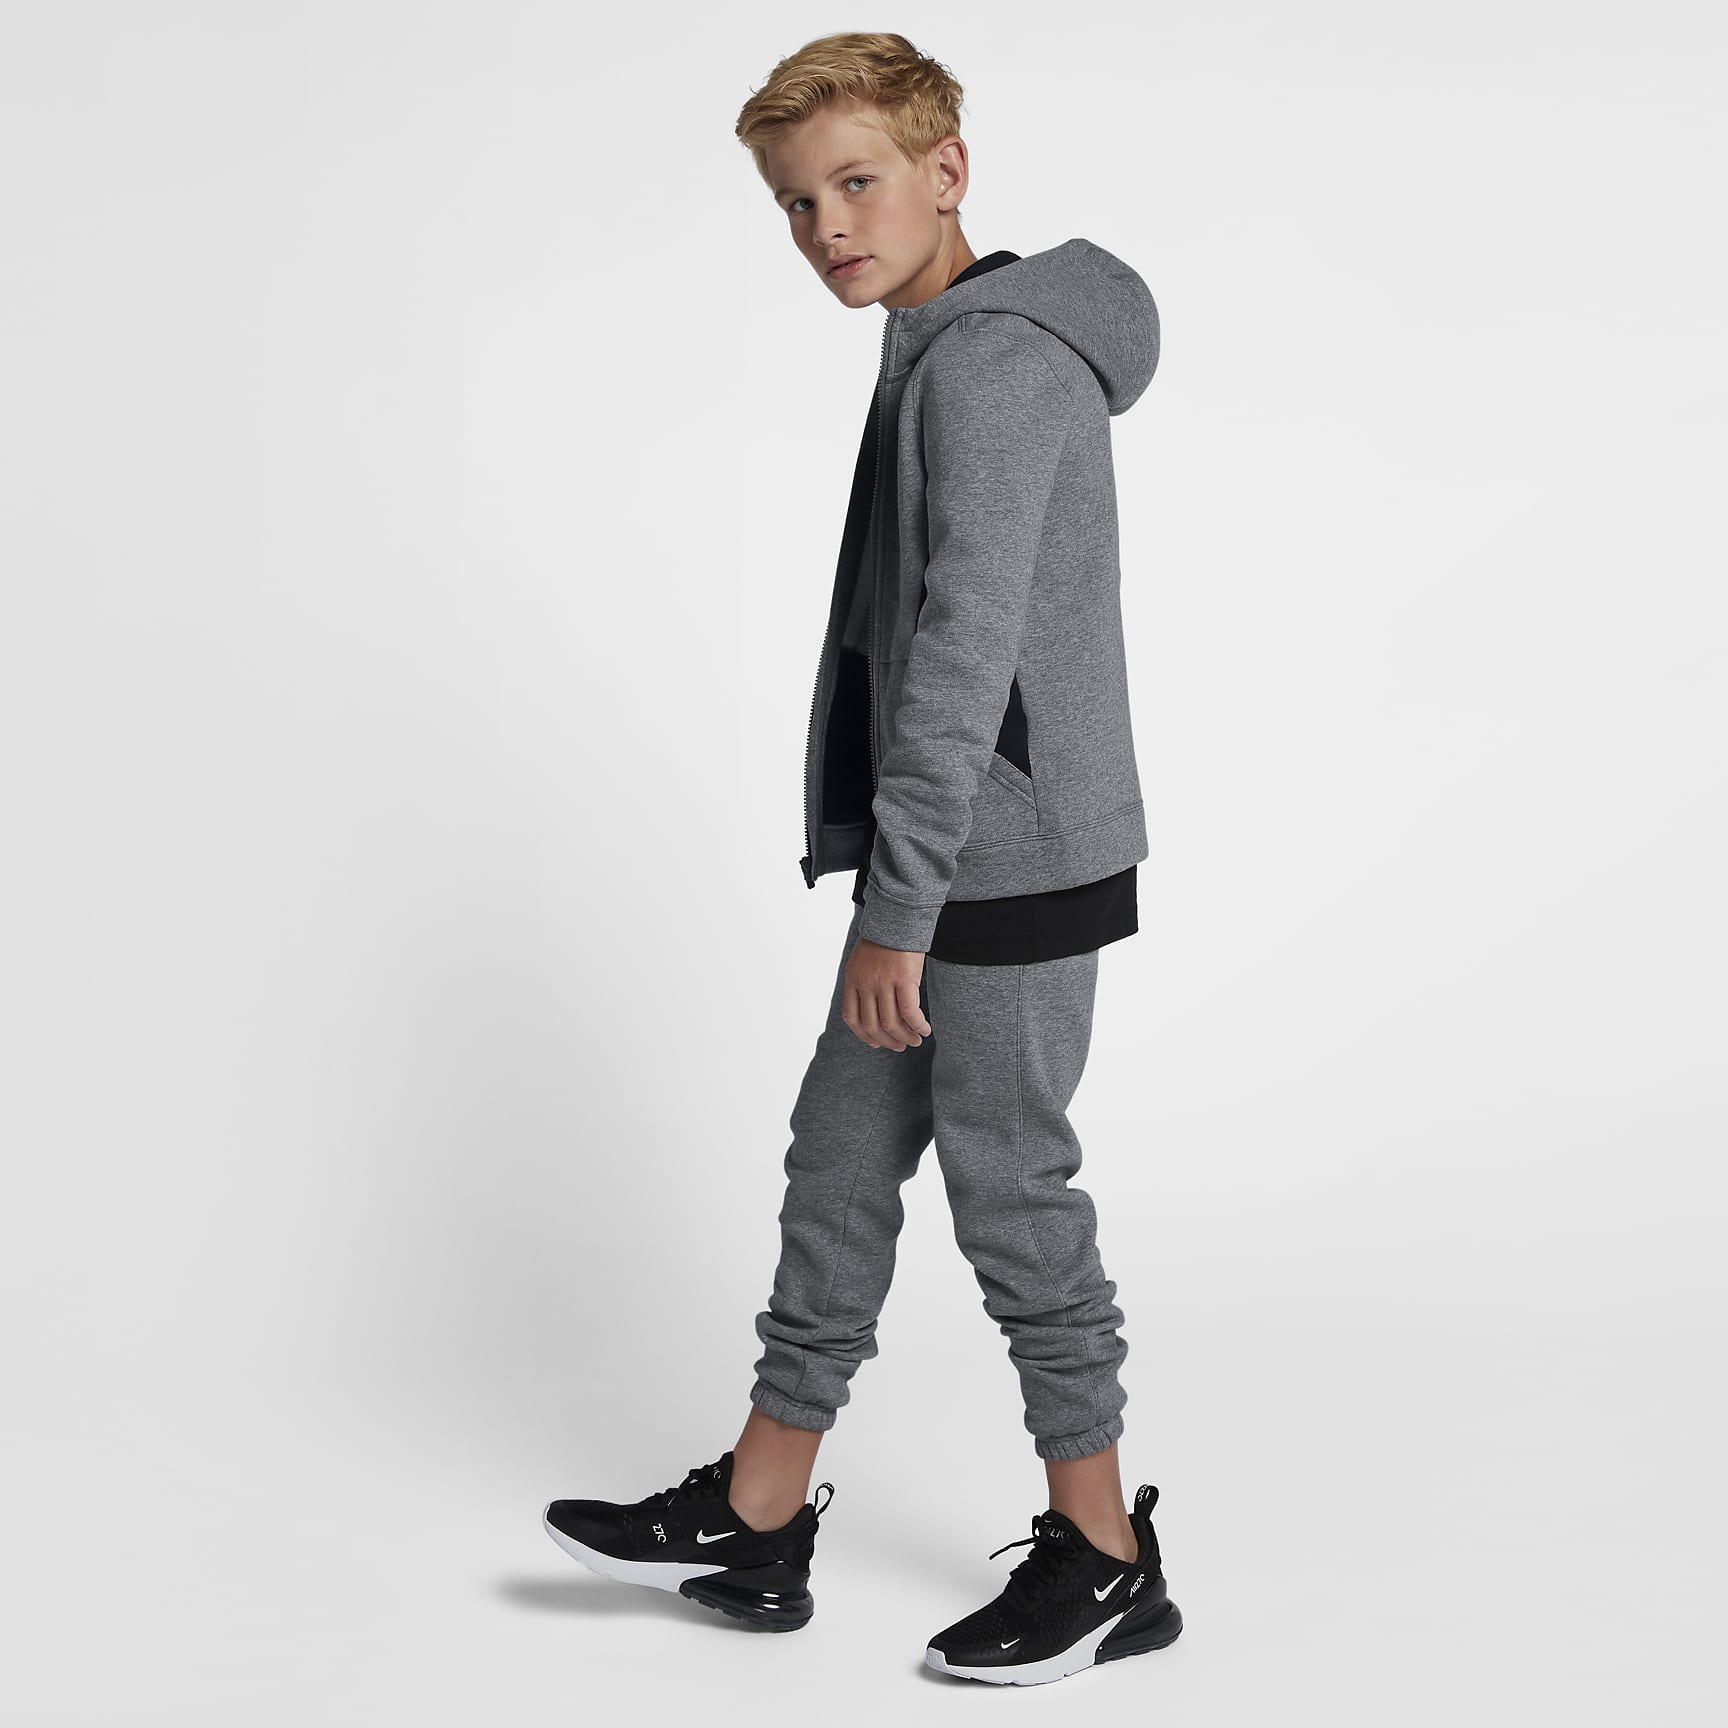 Nike Sportswear Older Kids' (Boys') Tracksuit - Carbon Heather/Black/White